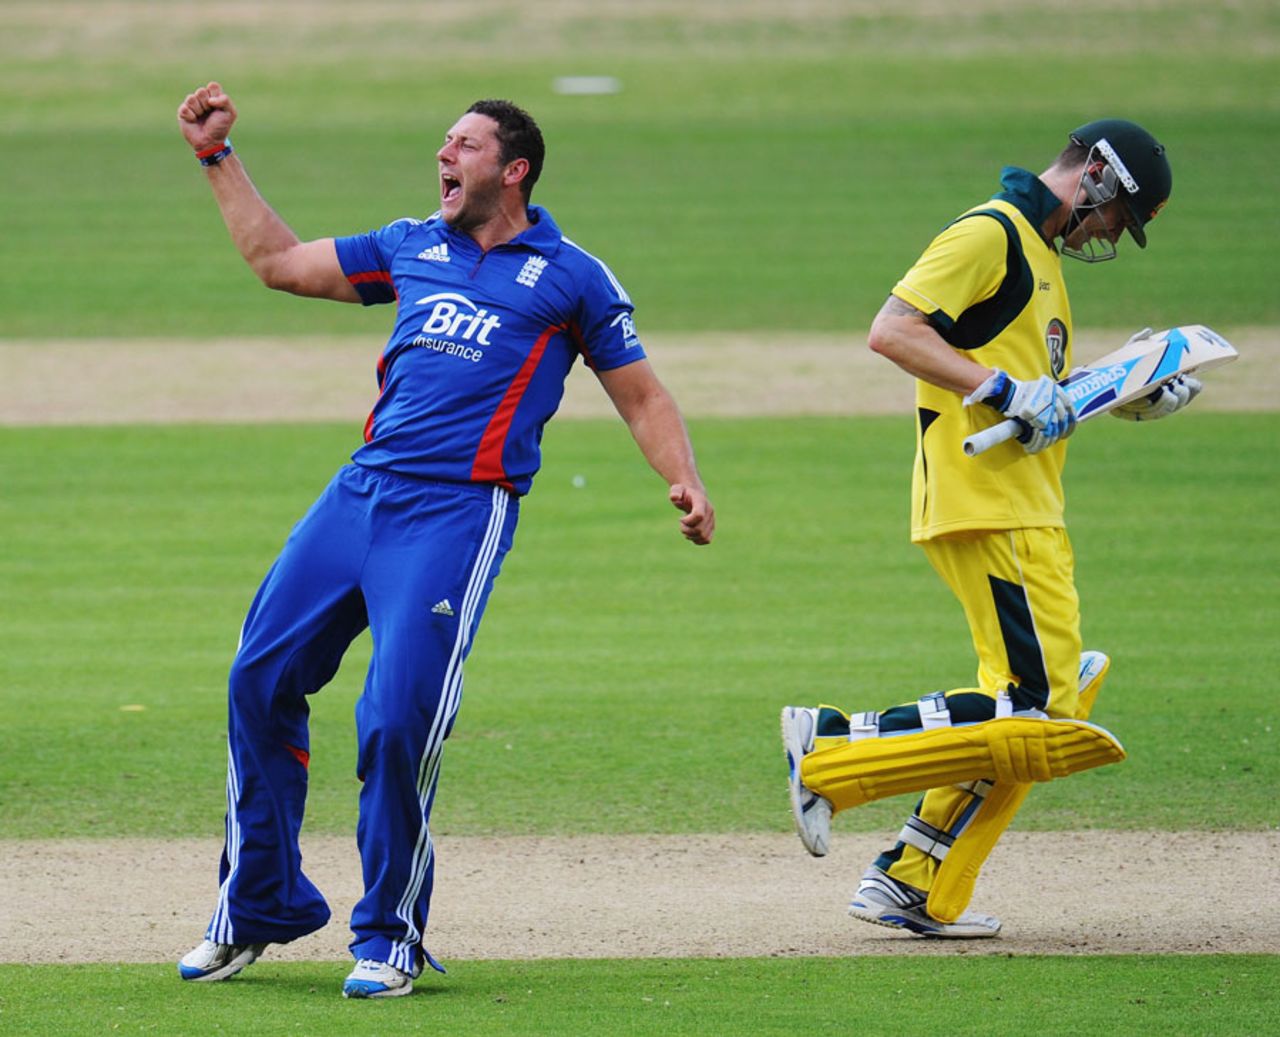 Tim Bresnan trapped Michael Clarke lbw, England v Australia, 1st ODI, Lord's, June 29, 2012